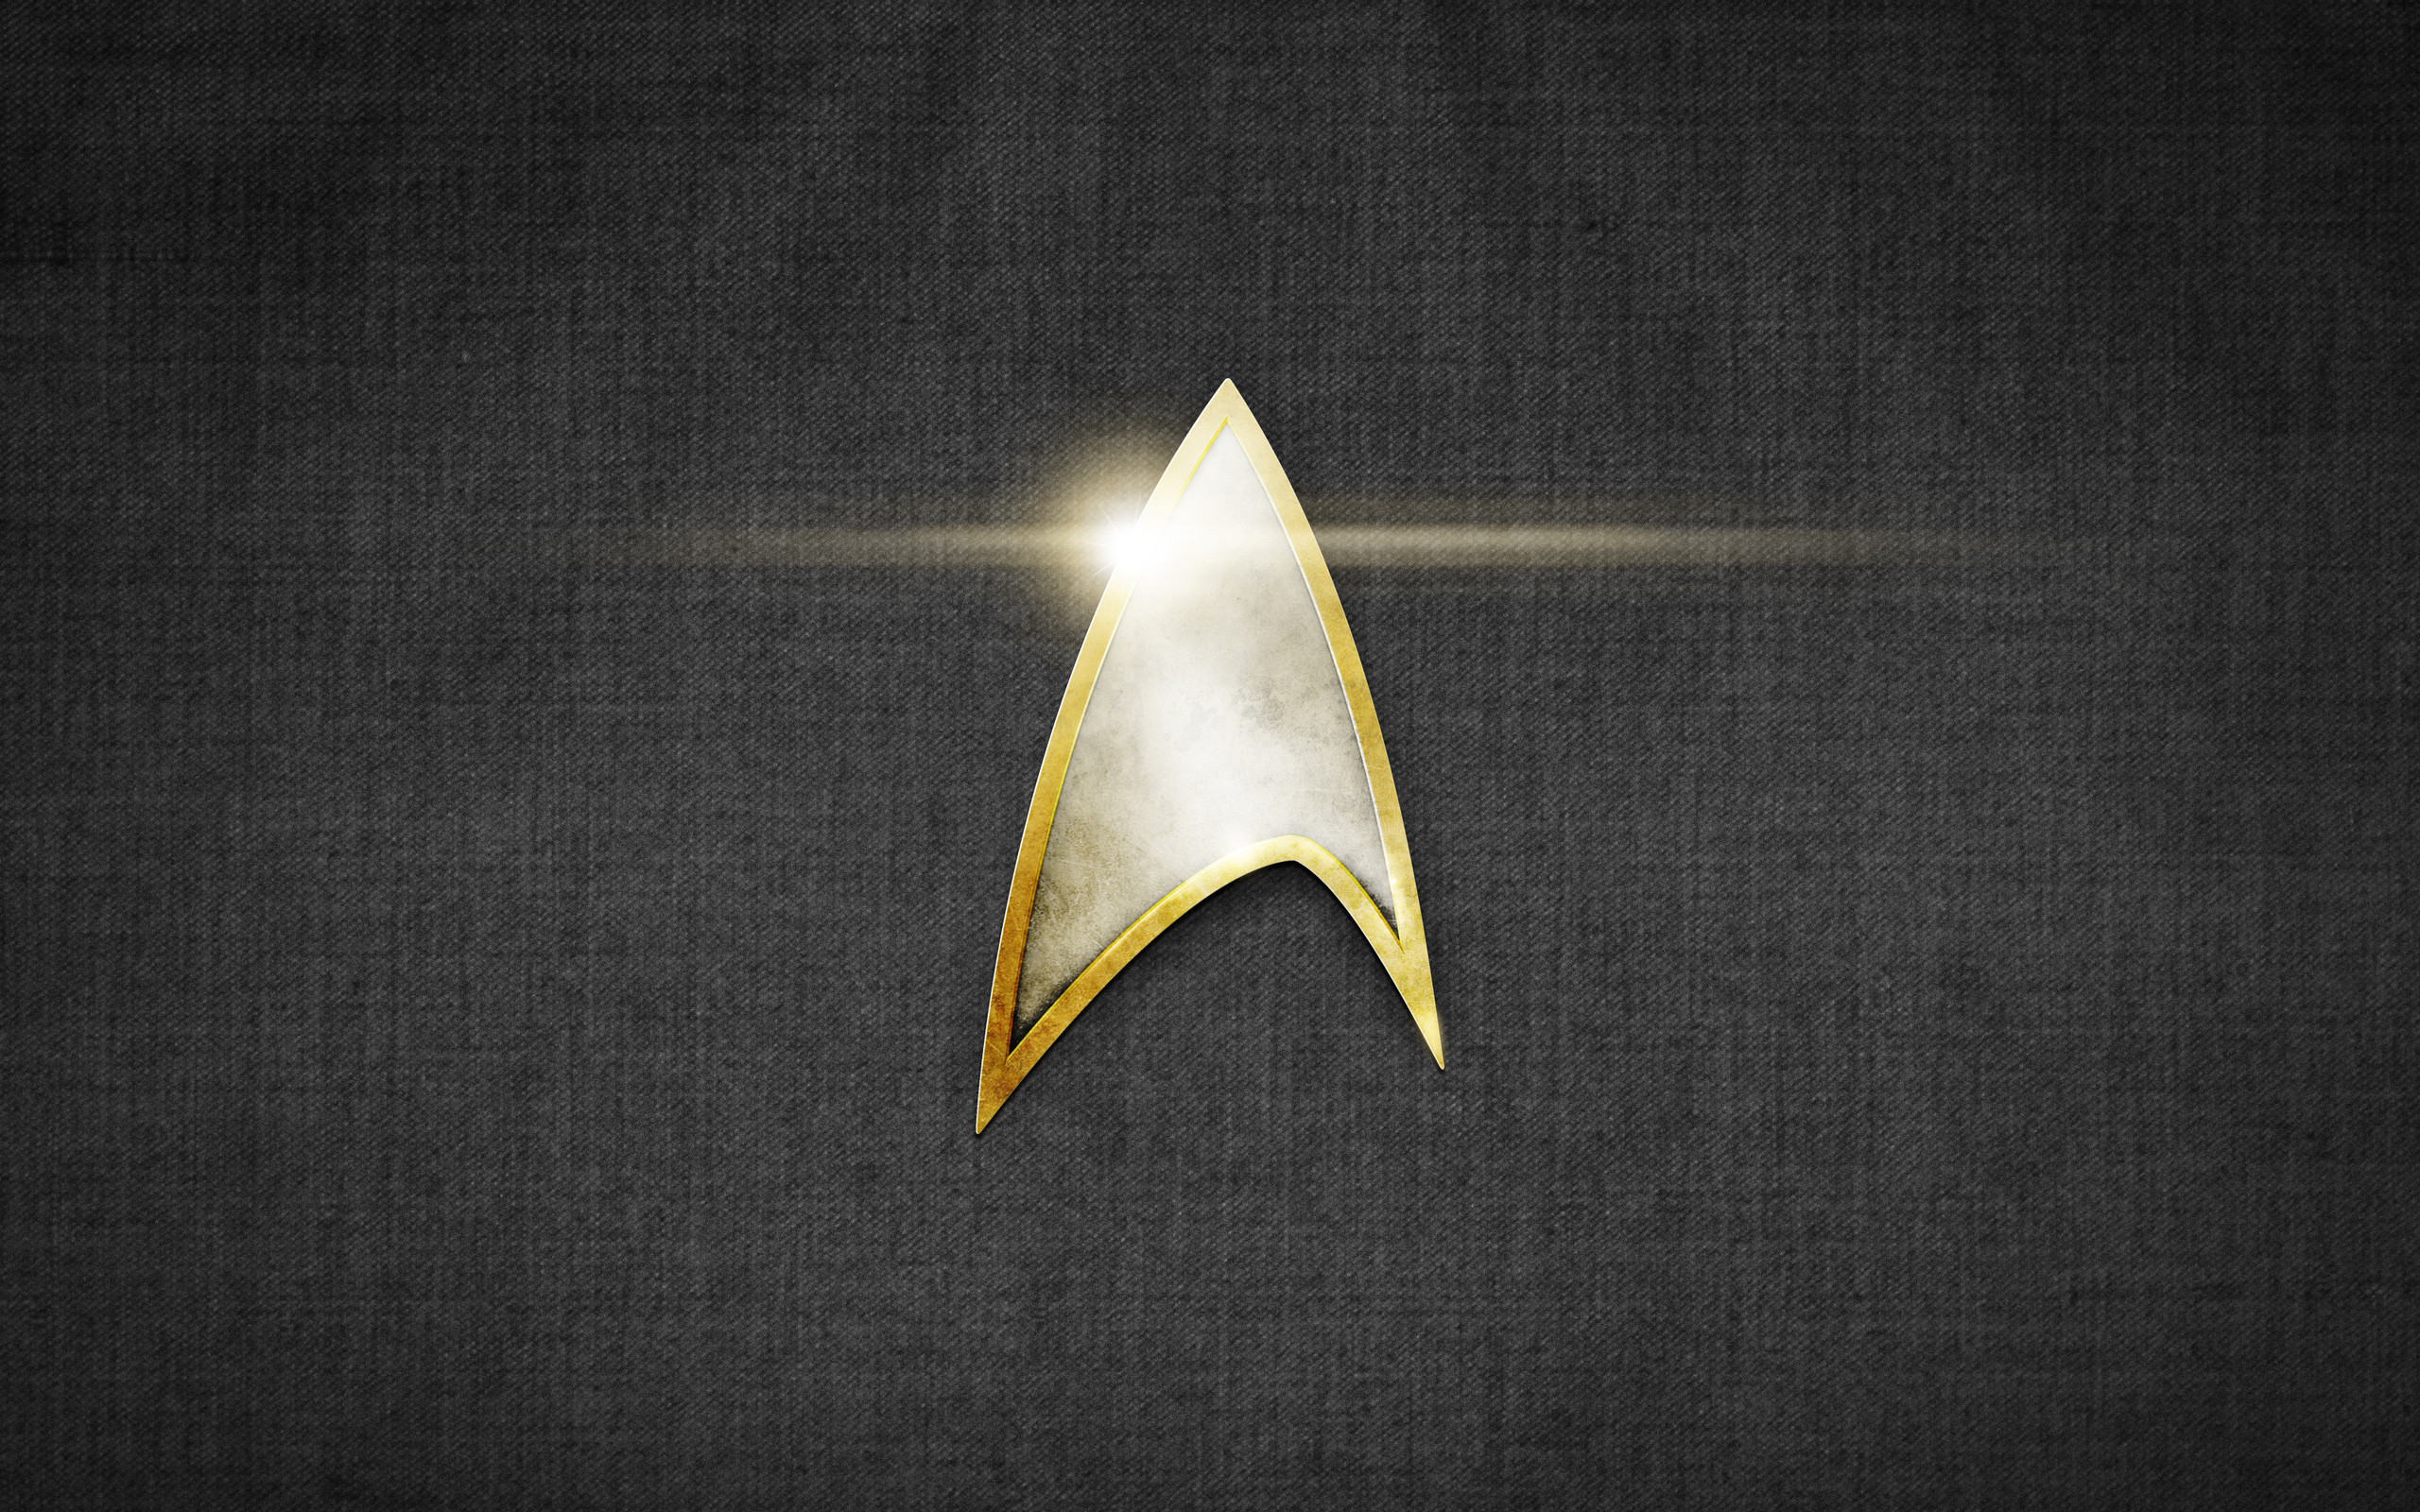 2560x1600 25 best ideas about <b>Star Trek Wallpaper</b> on Pinterest